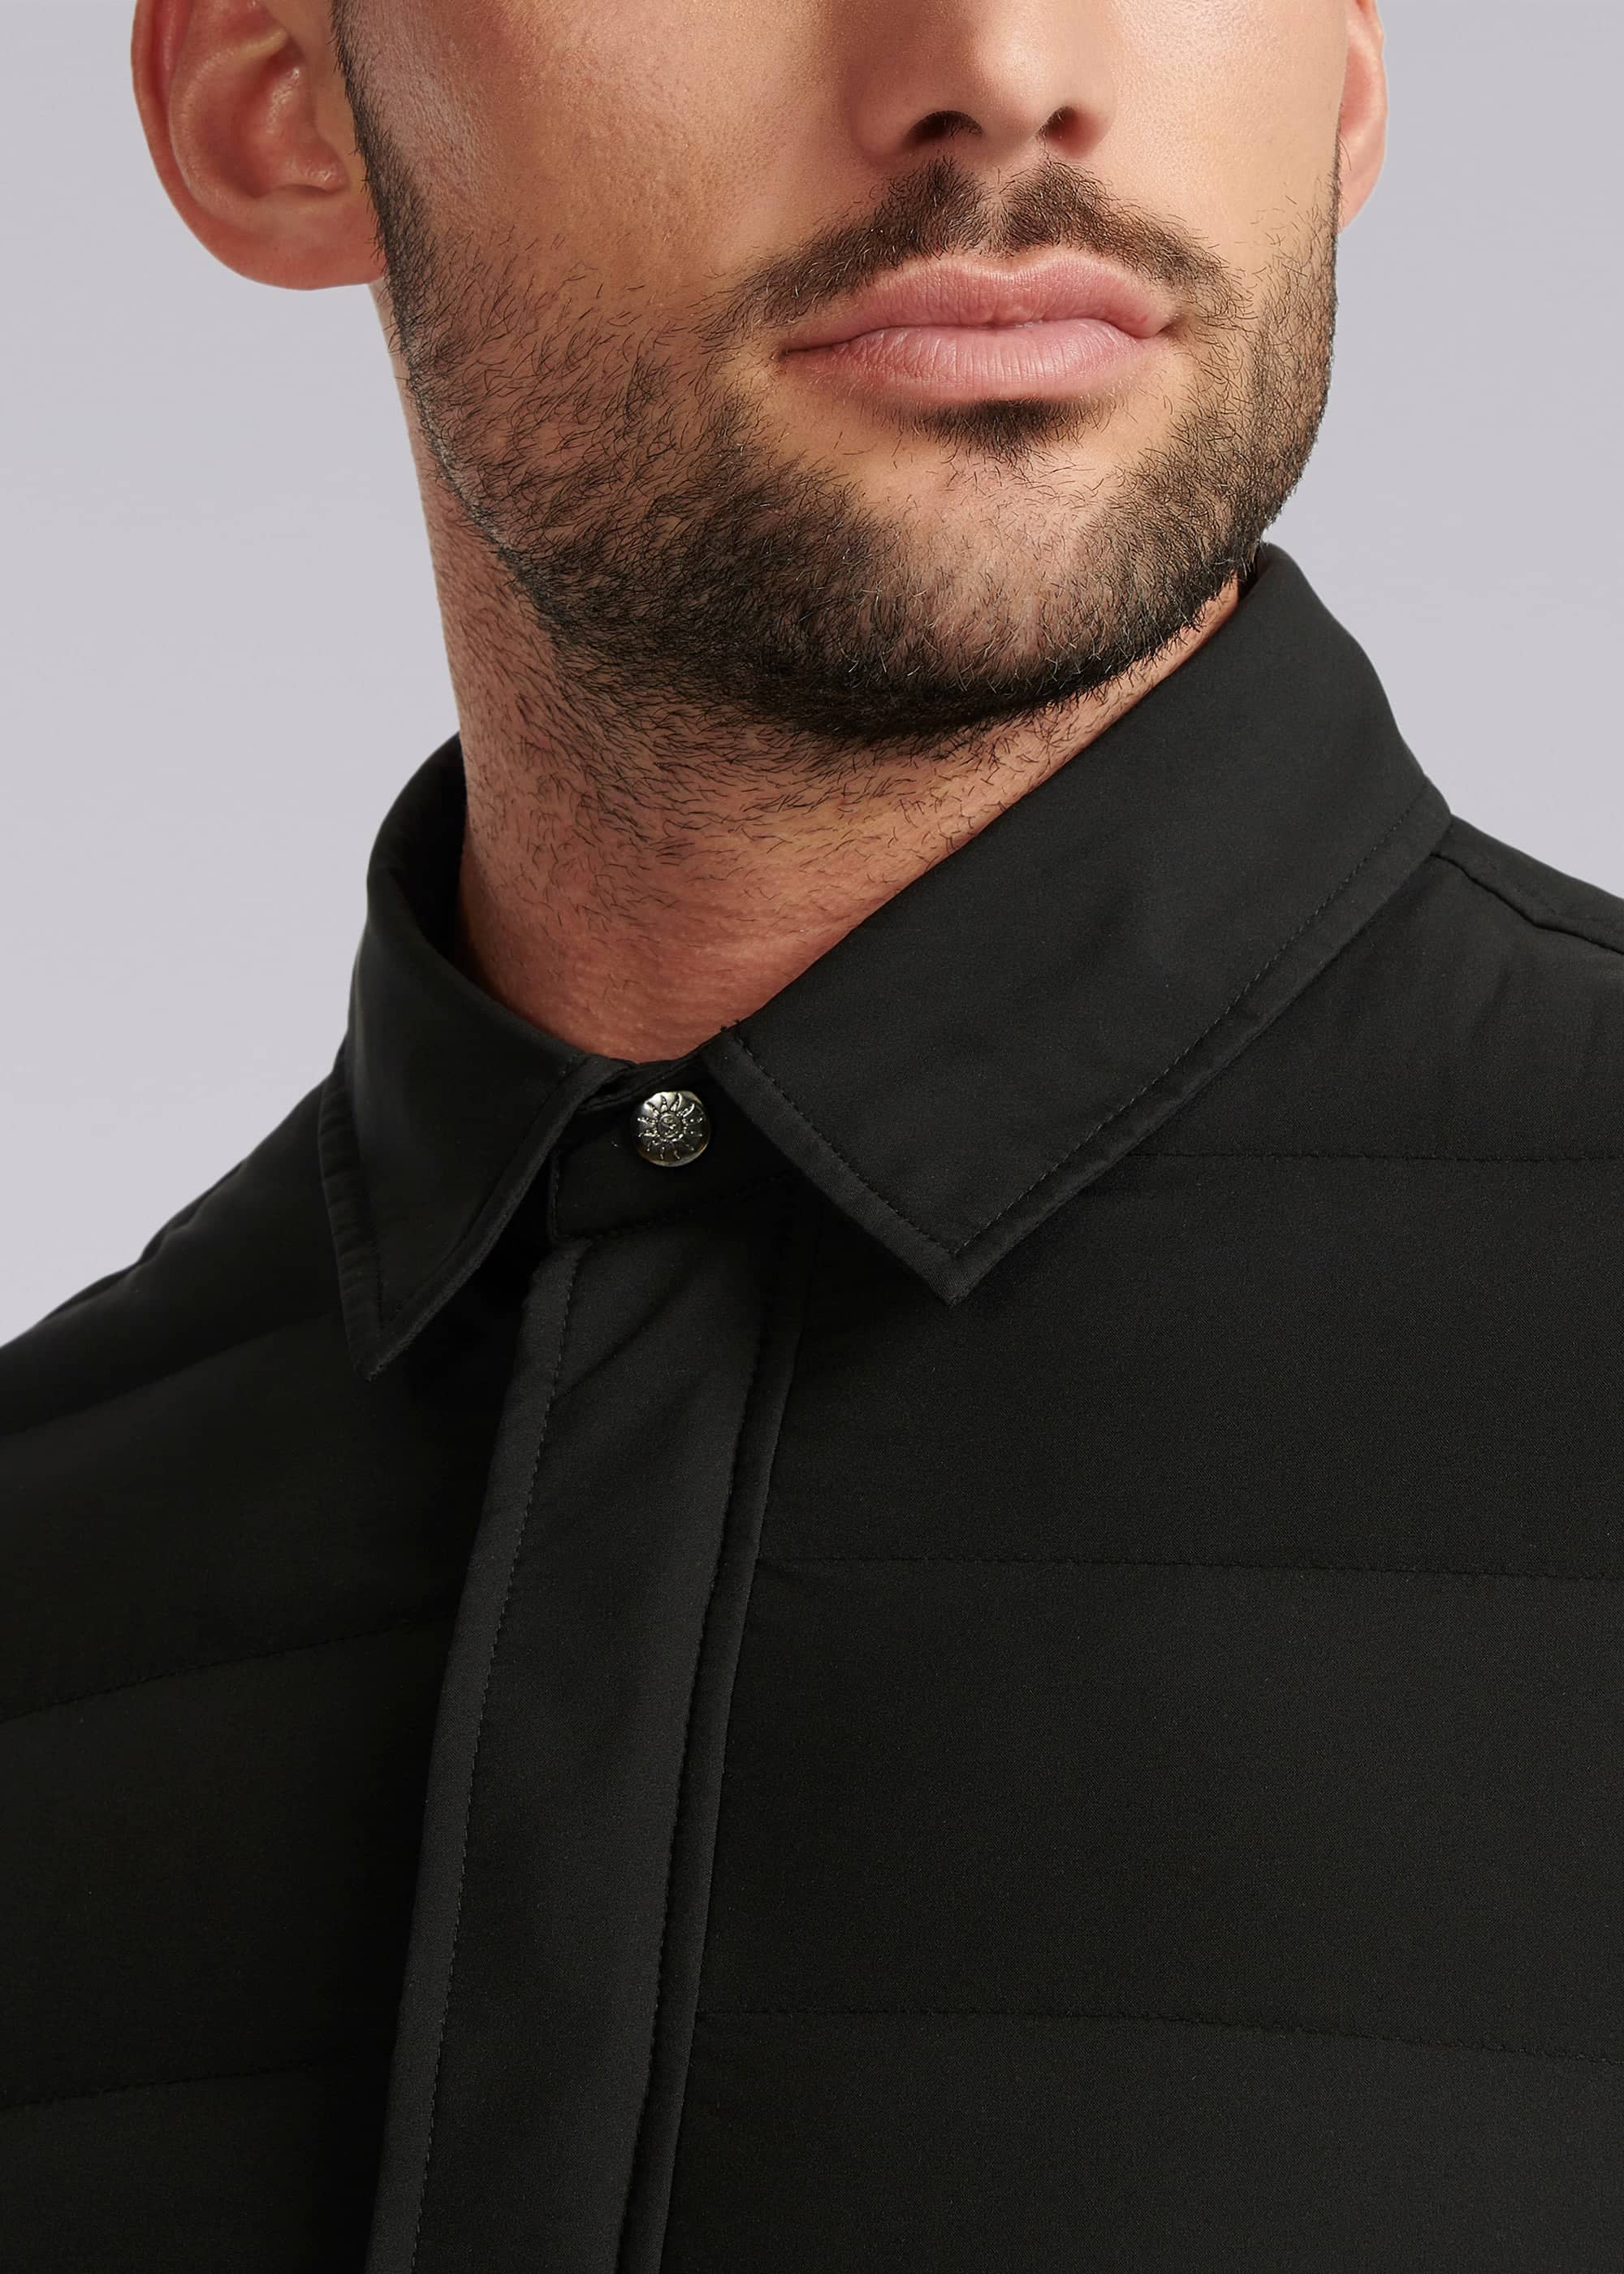 Sandbanks Puffer Shirt Jacket - Black